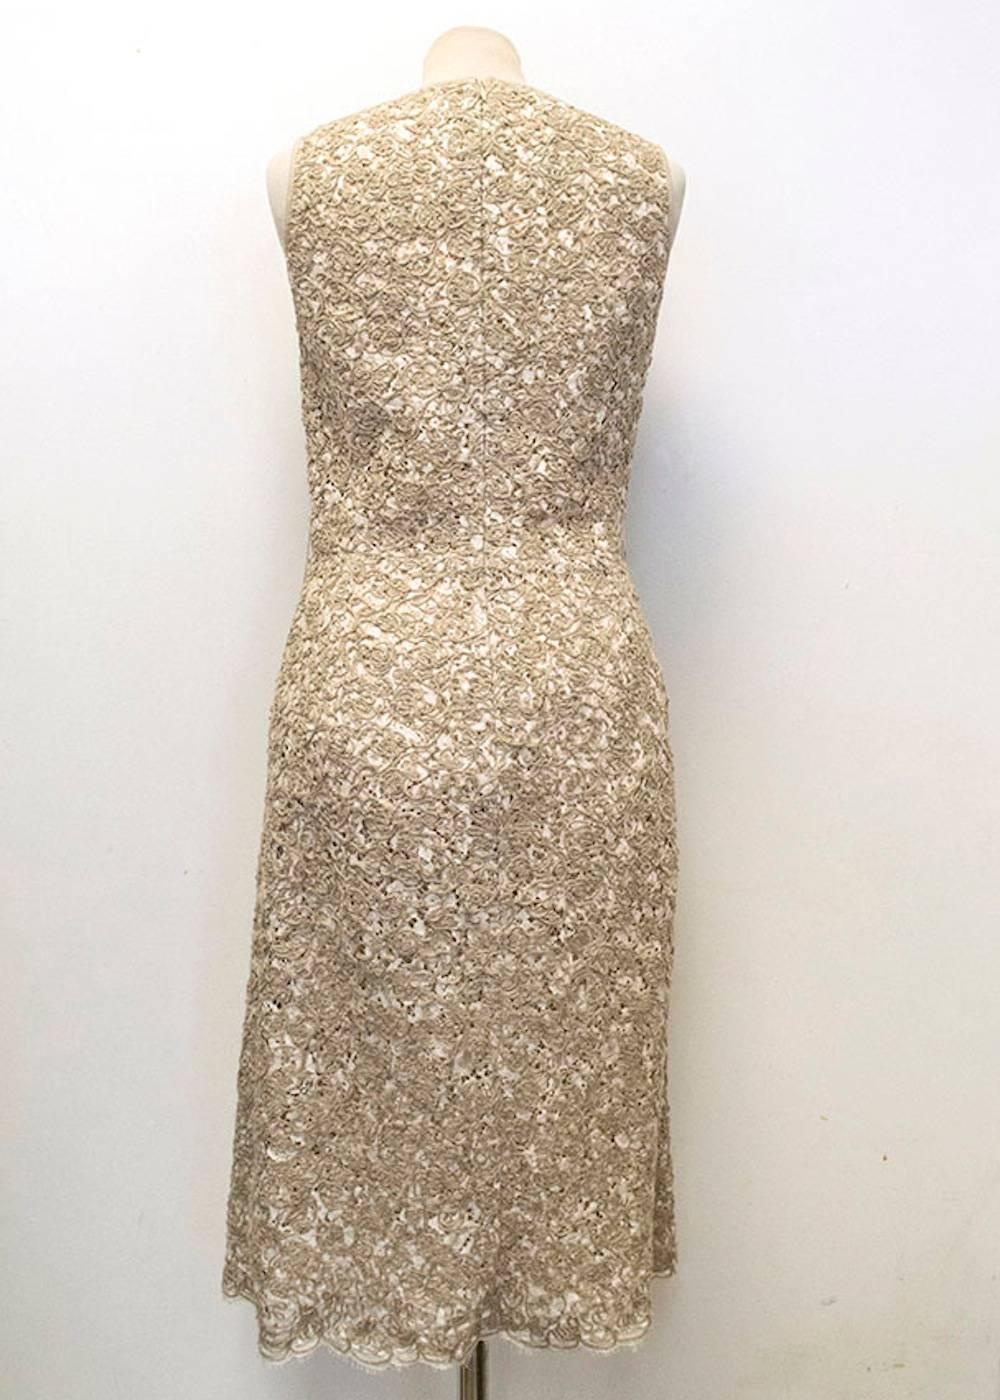 Michael Kors Textured Beige Cotton-Linen Dress For Sale 2